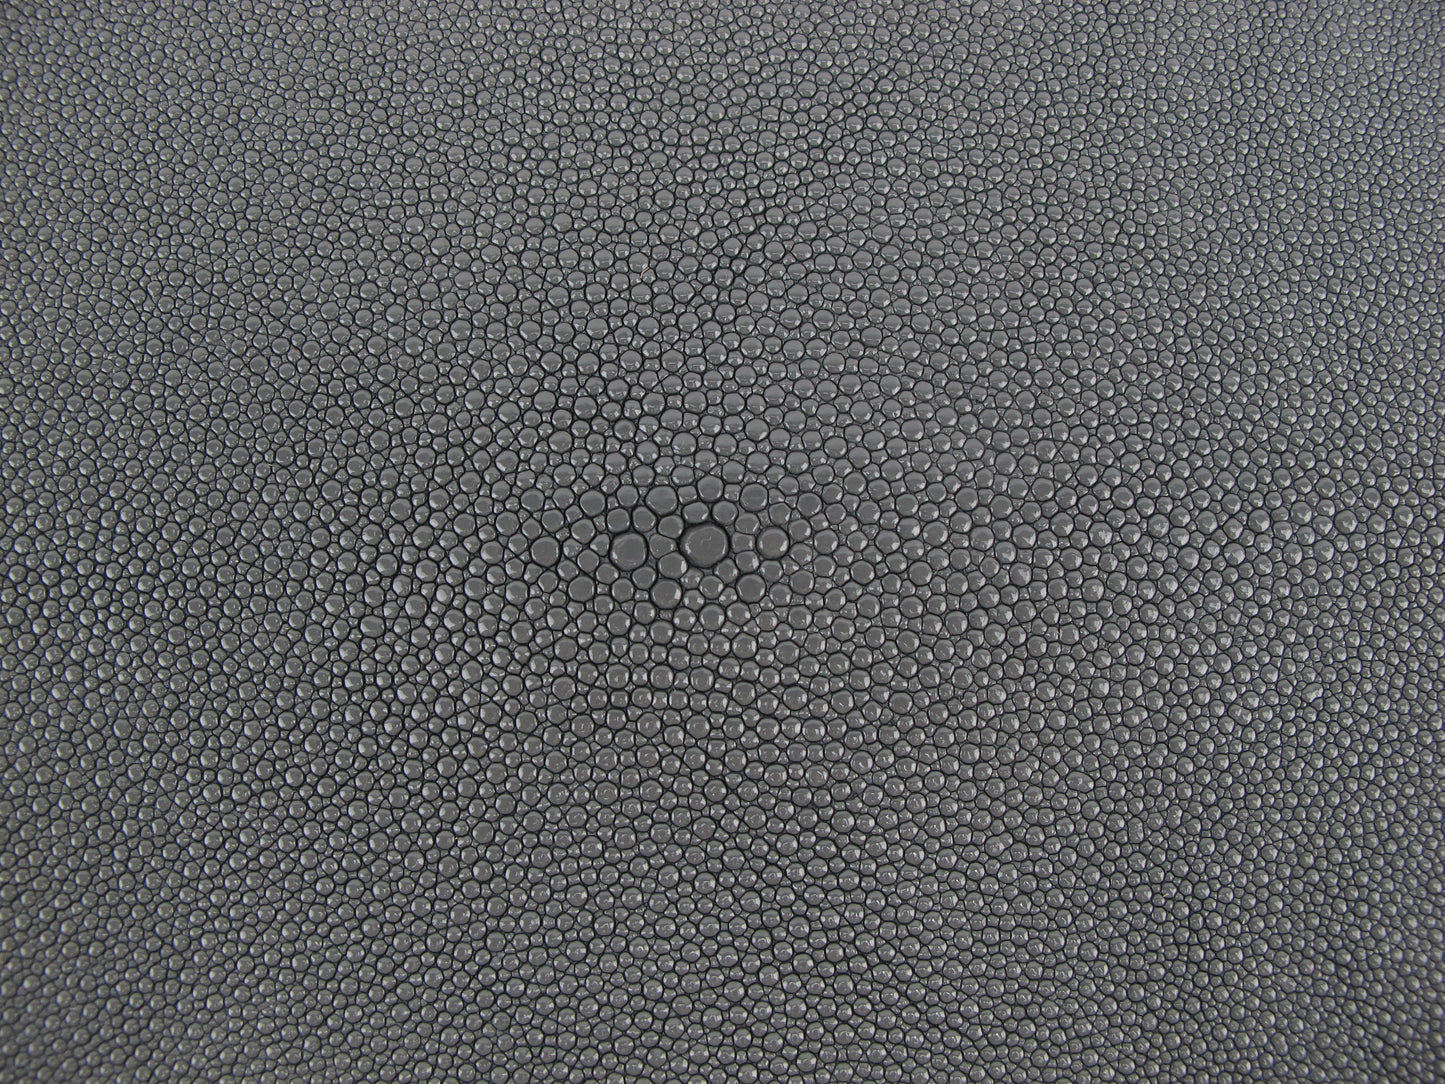 Genuine Stingray Skin Leather Round Shape Hide Pelt Traffic Grey